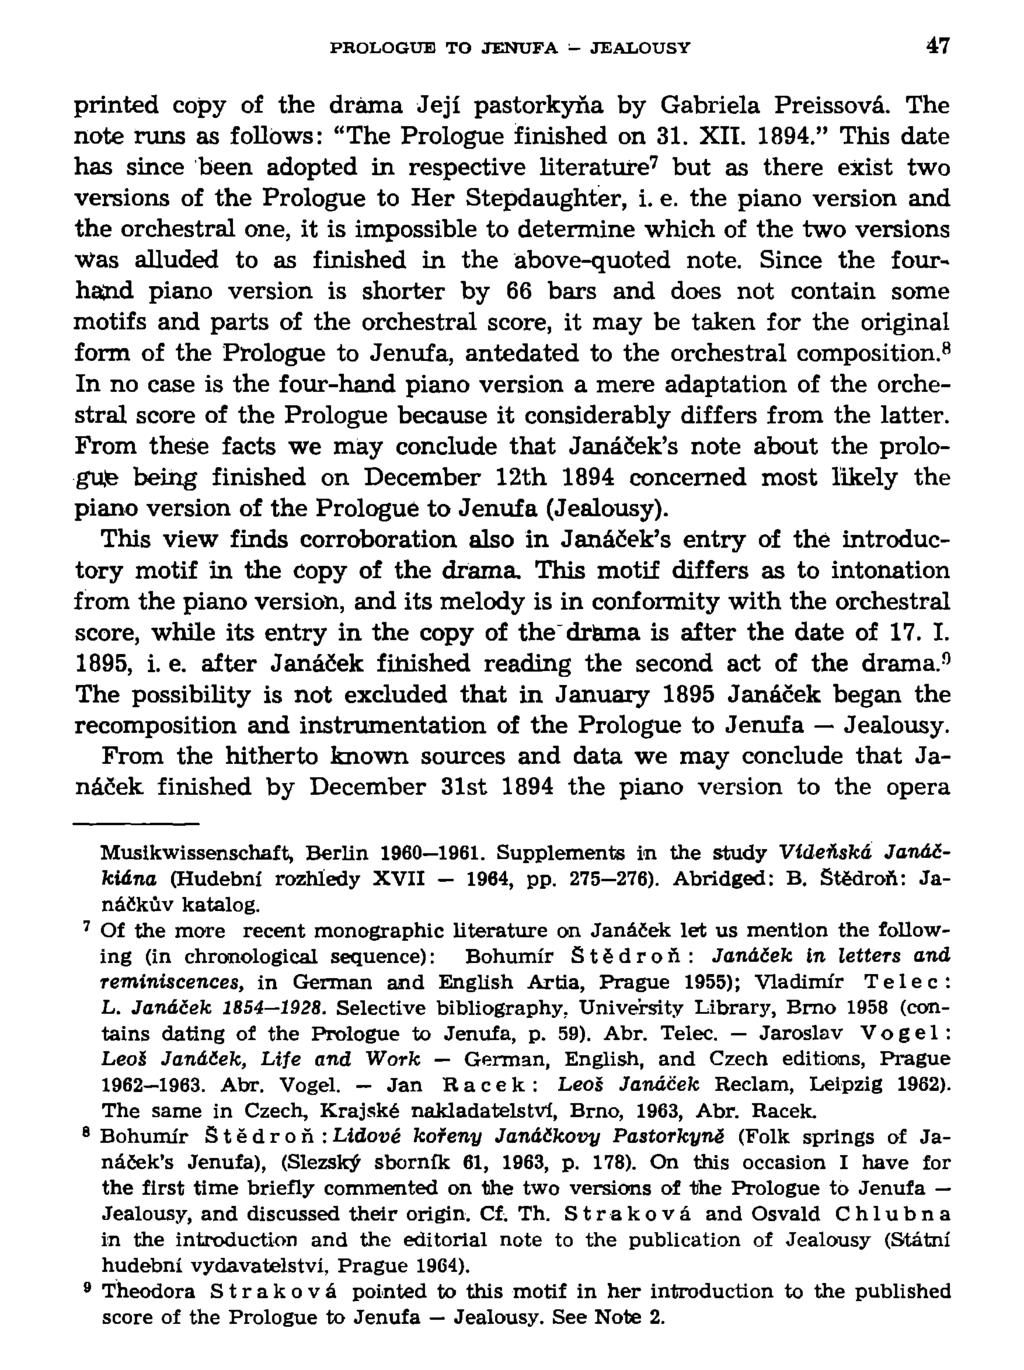 PROLOGUE TO JENUFA - JEALOUSY 47 printed copy of the drama Jeji pastorkyna by Gabriela Preissova. The note runs as follows: "The Prologue finished on 31. XII. 1894.